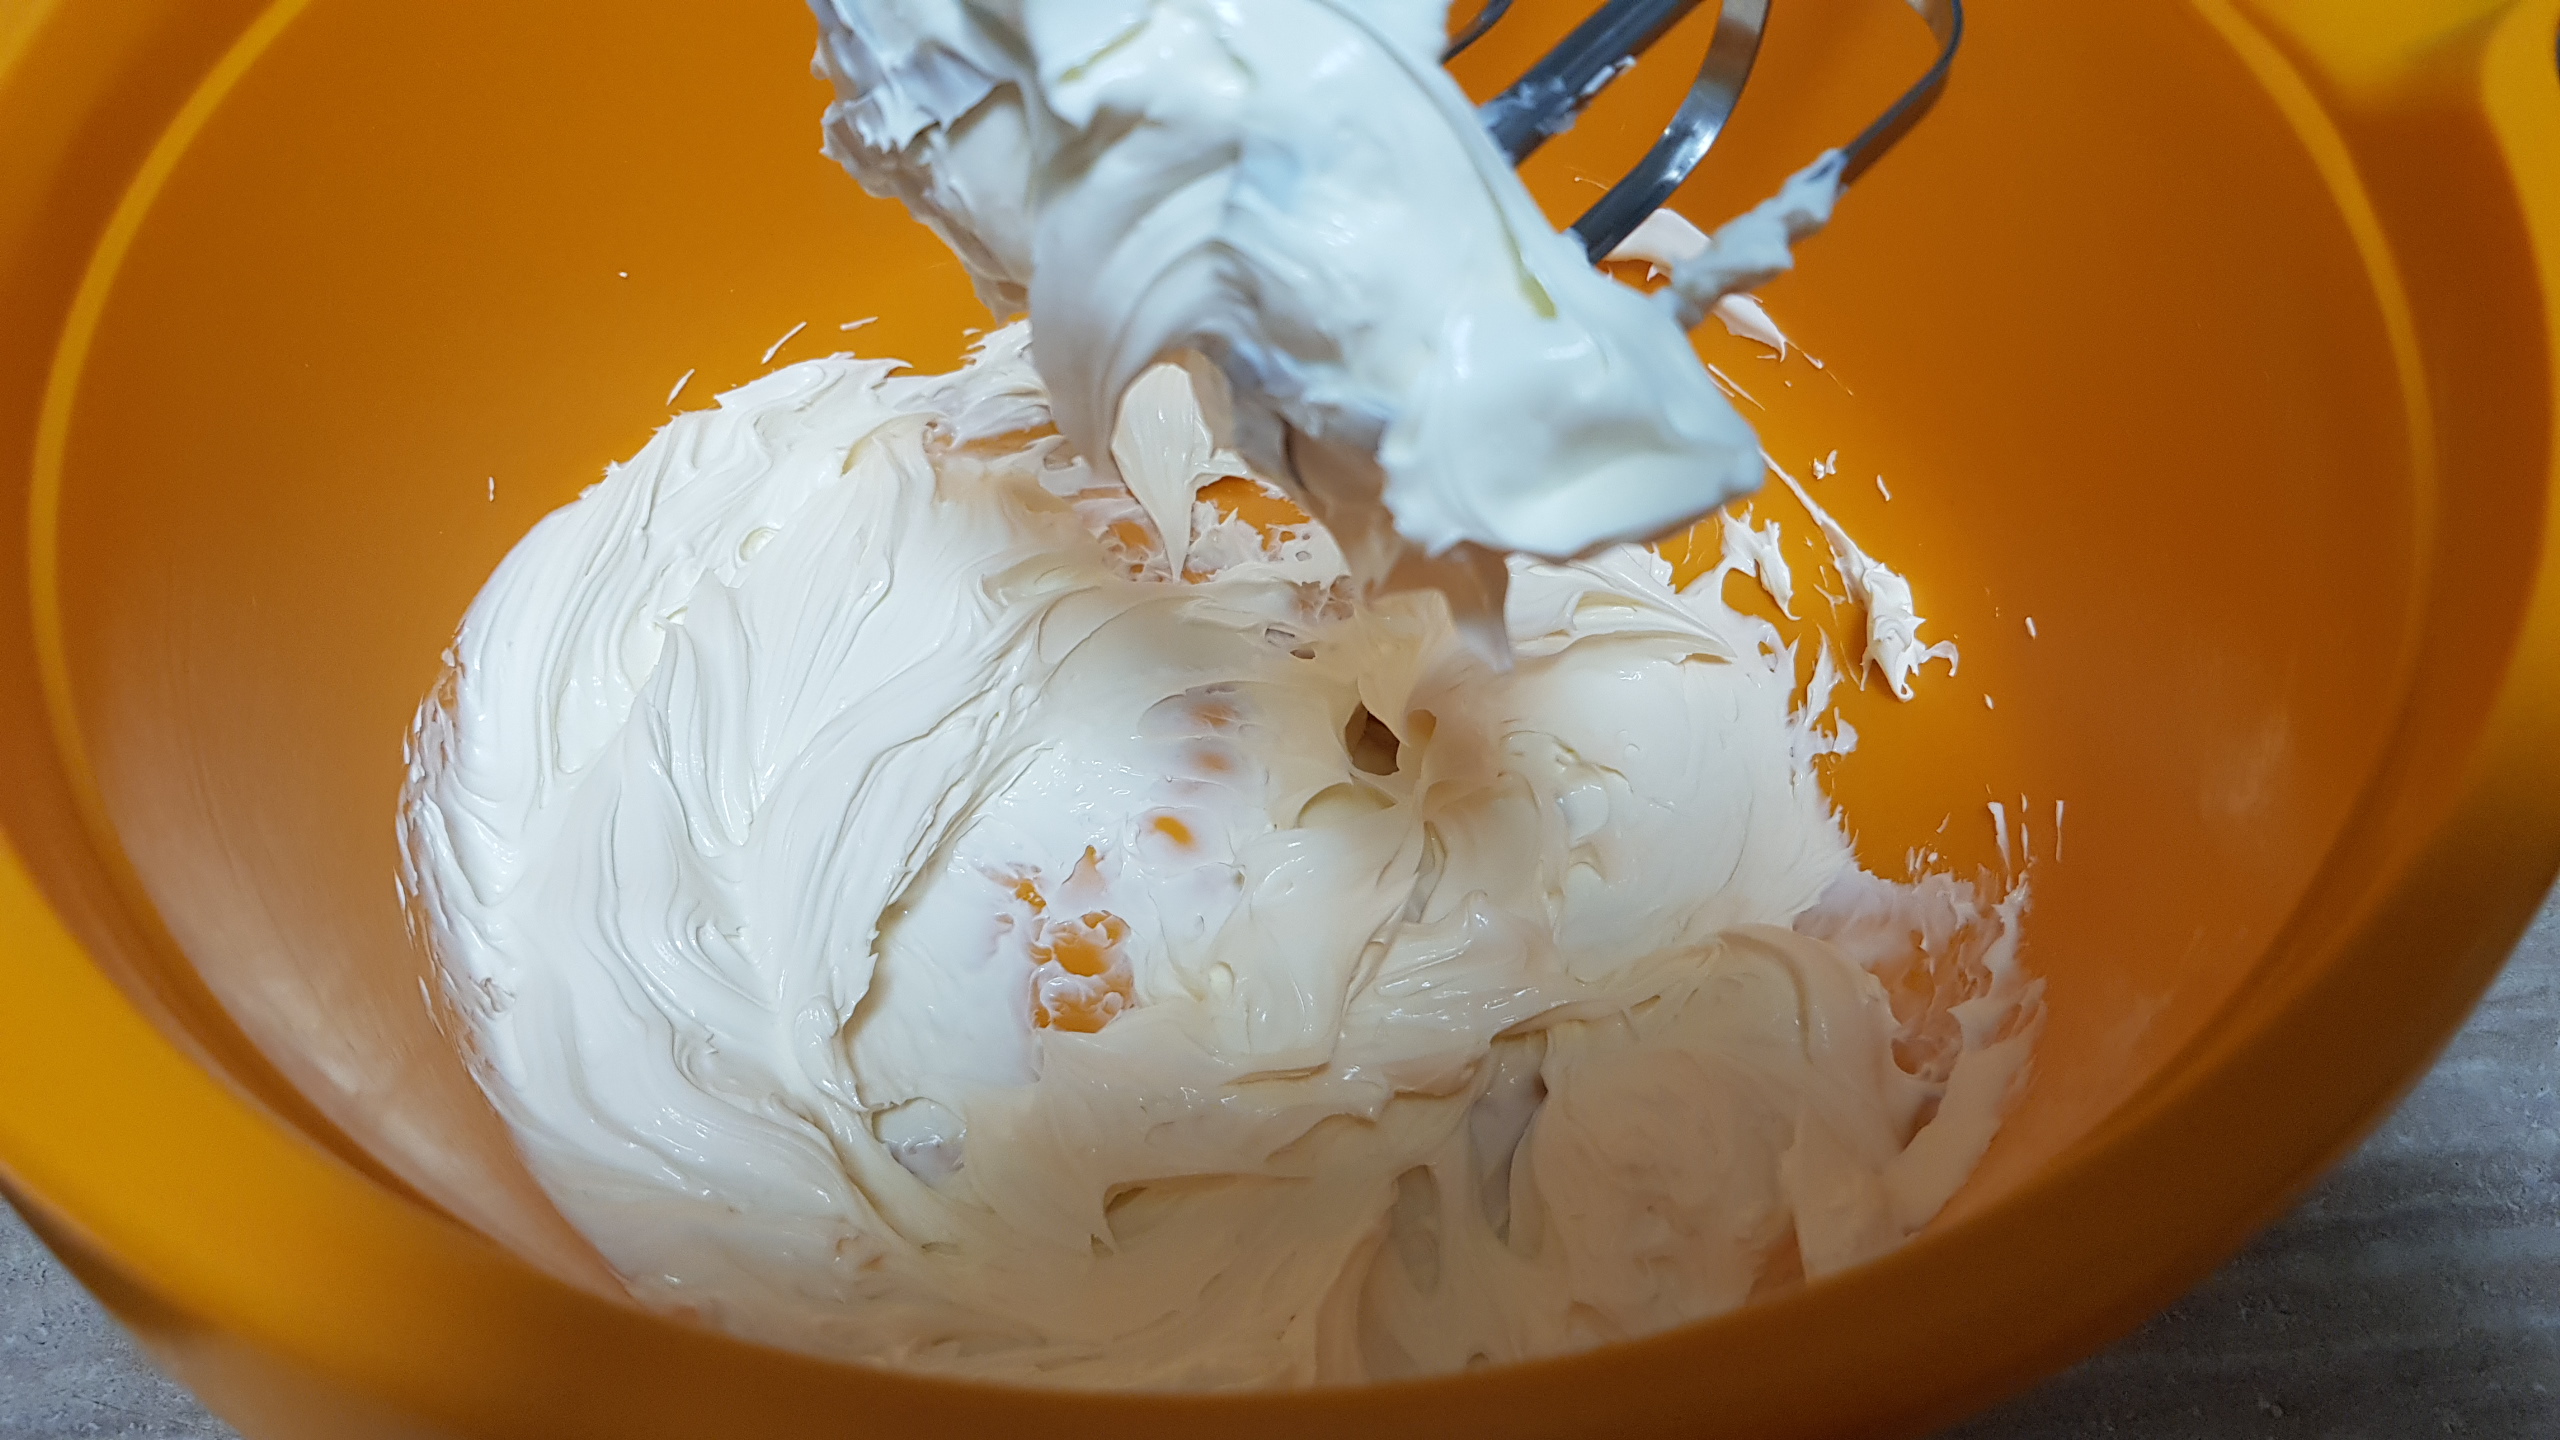 Desert tort cu crema de castane si crema de portocale - reteta nr. 1000